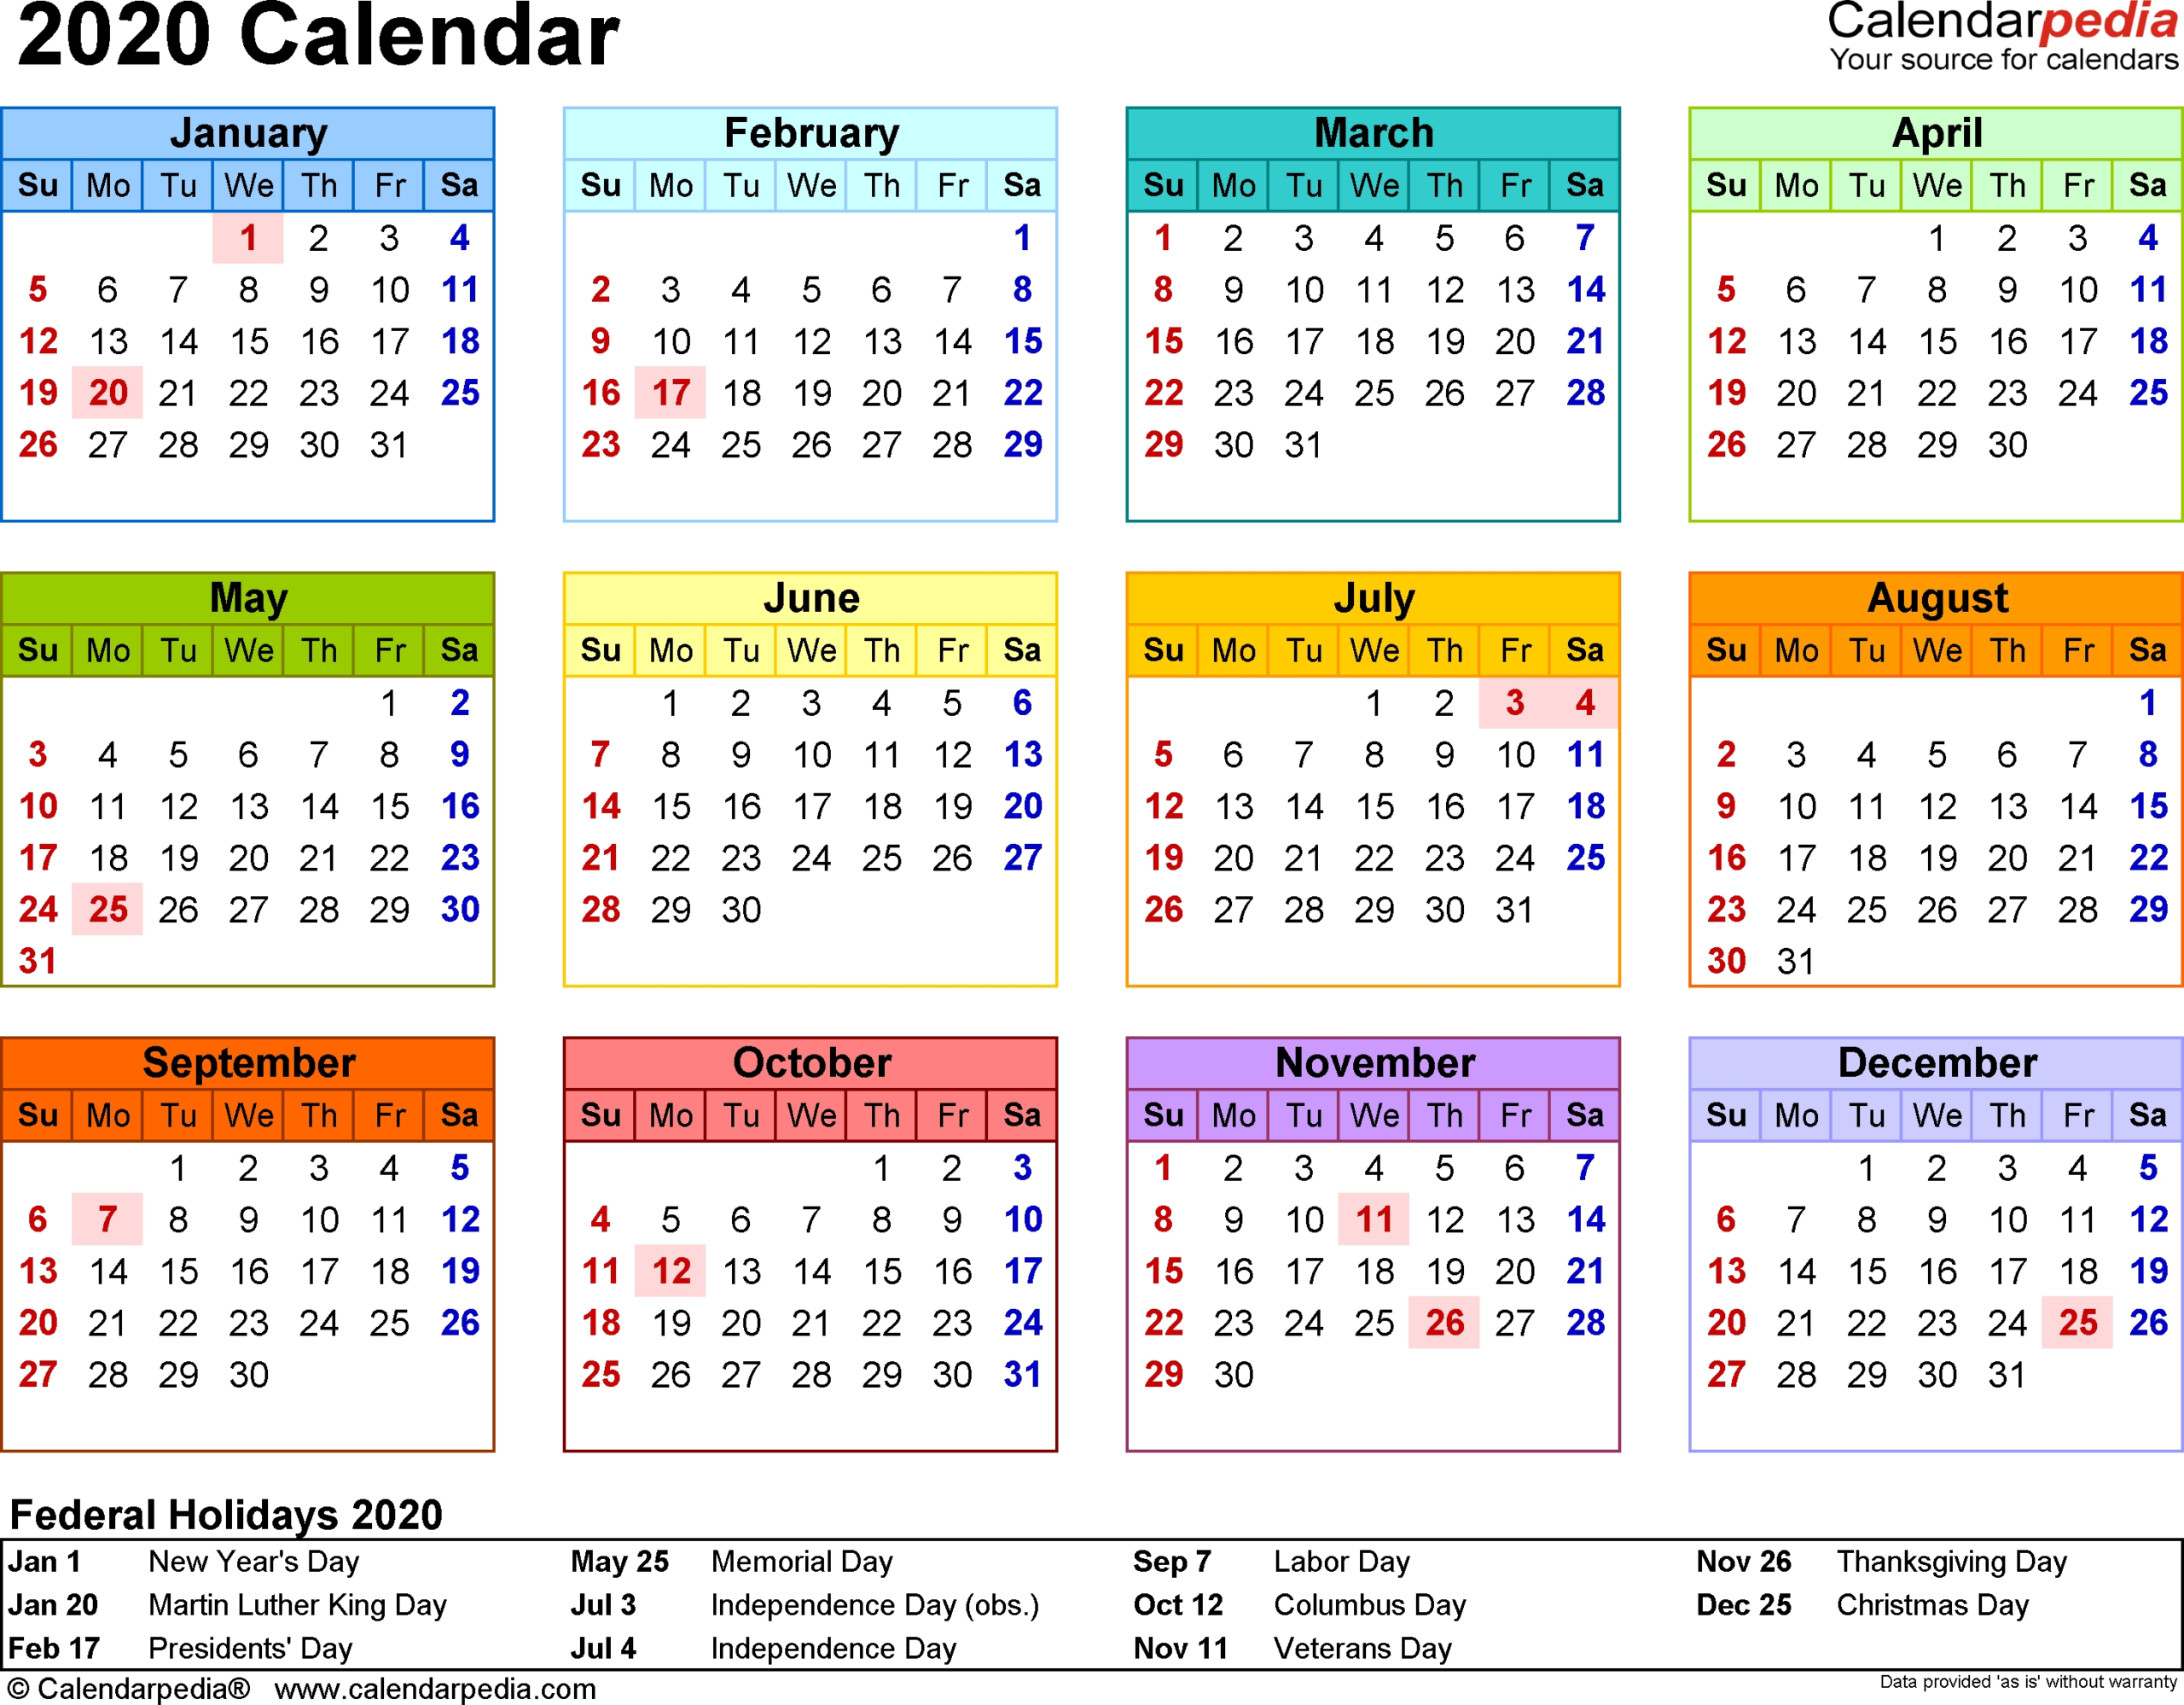 50 Kalenderwoche 2021 – Template Calendar Design